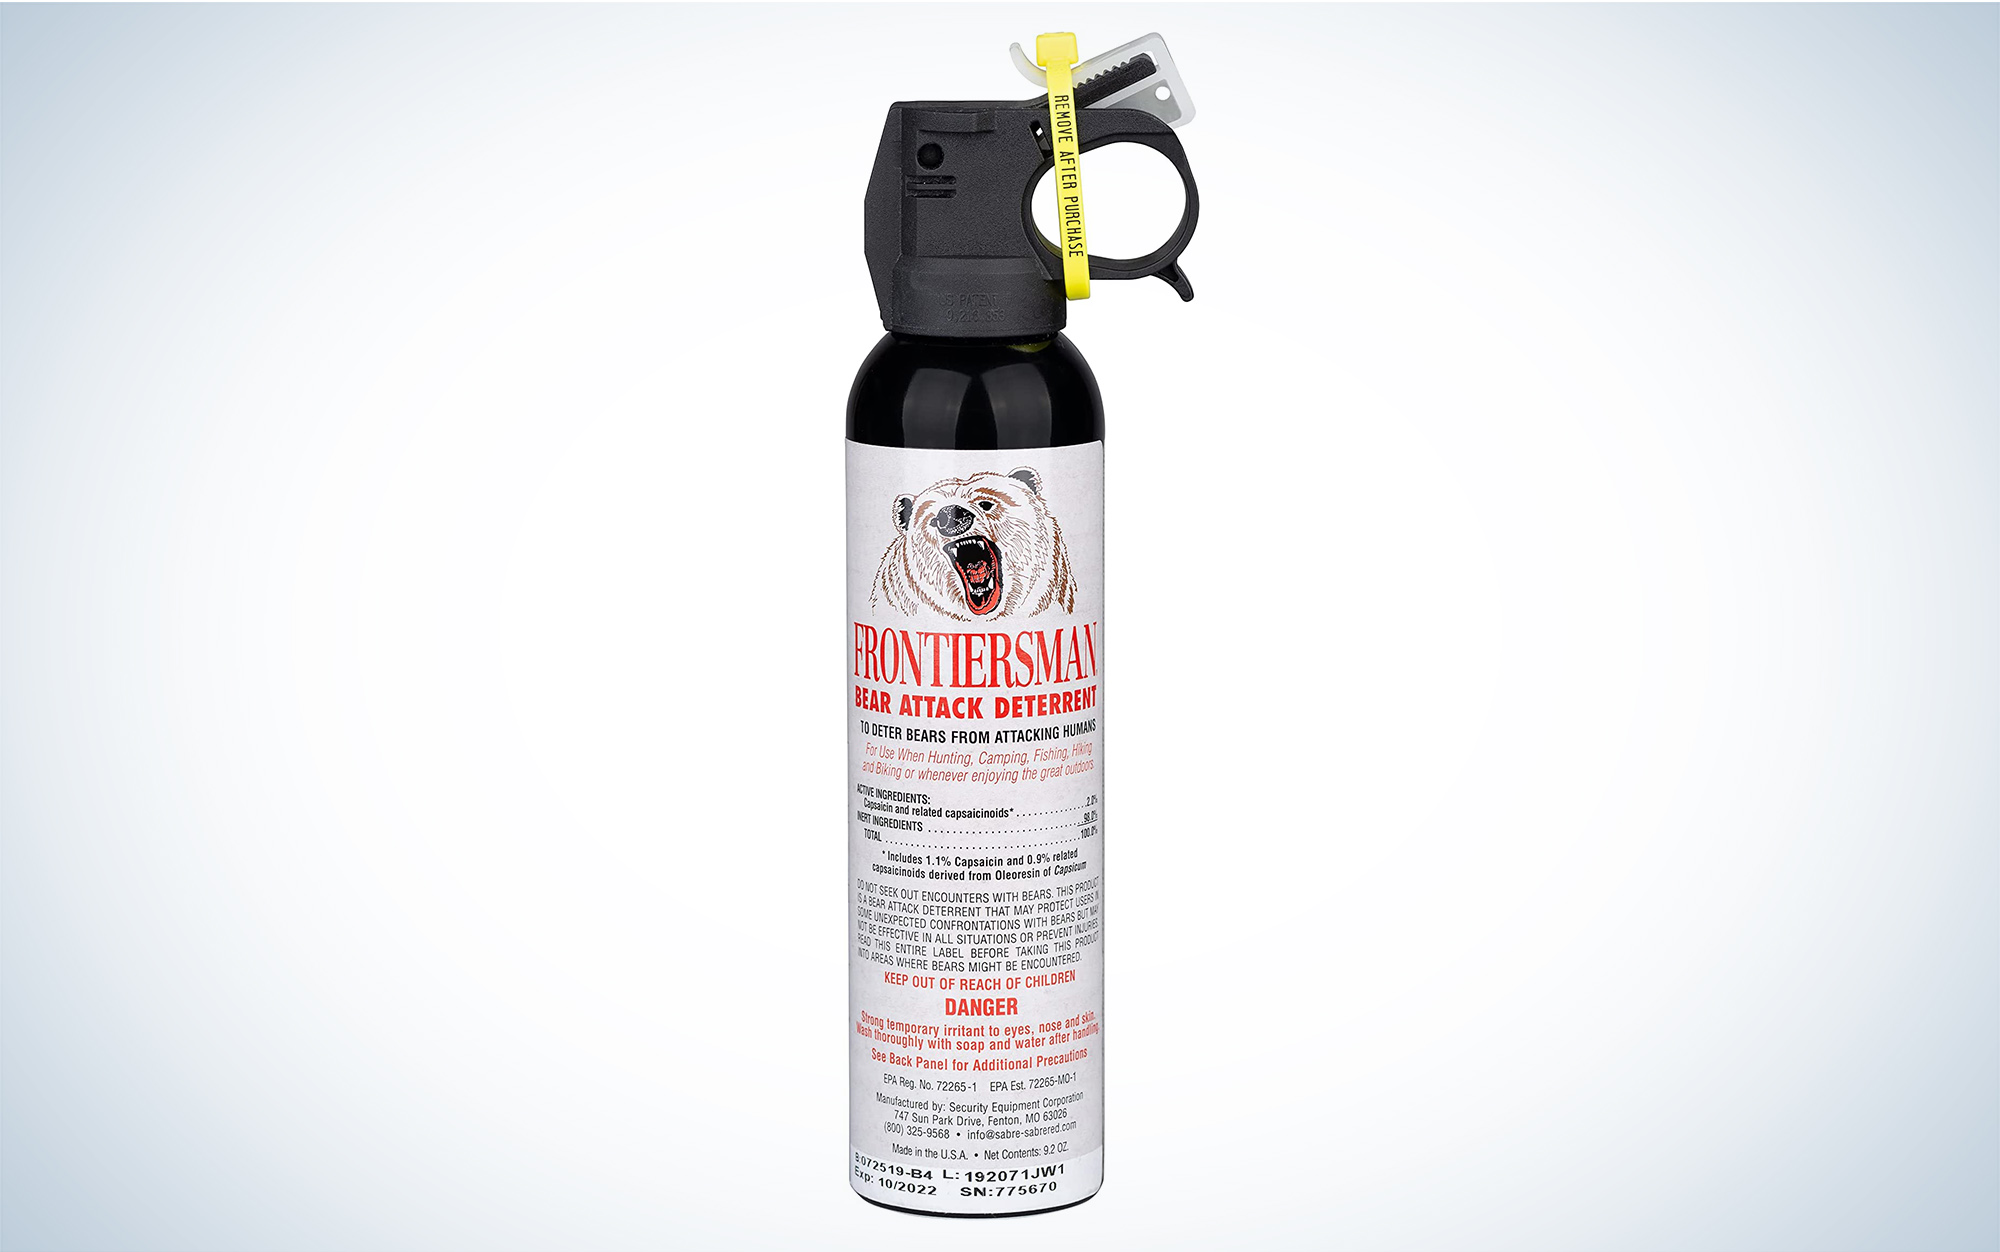 SABRE Bear Spray is on sale.